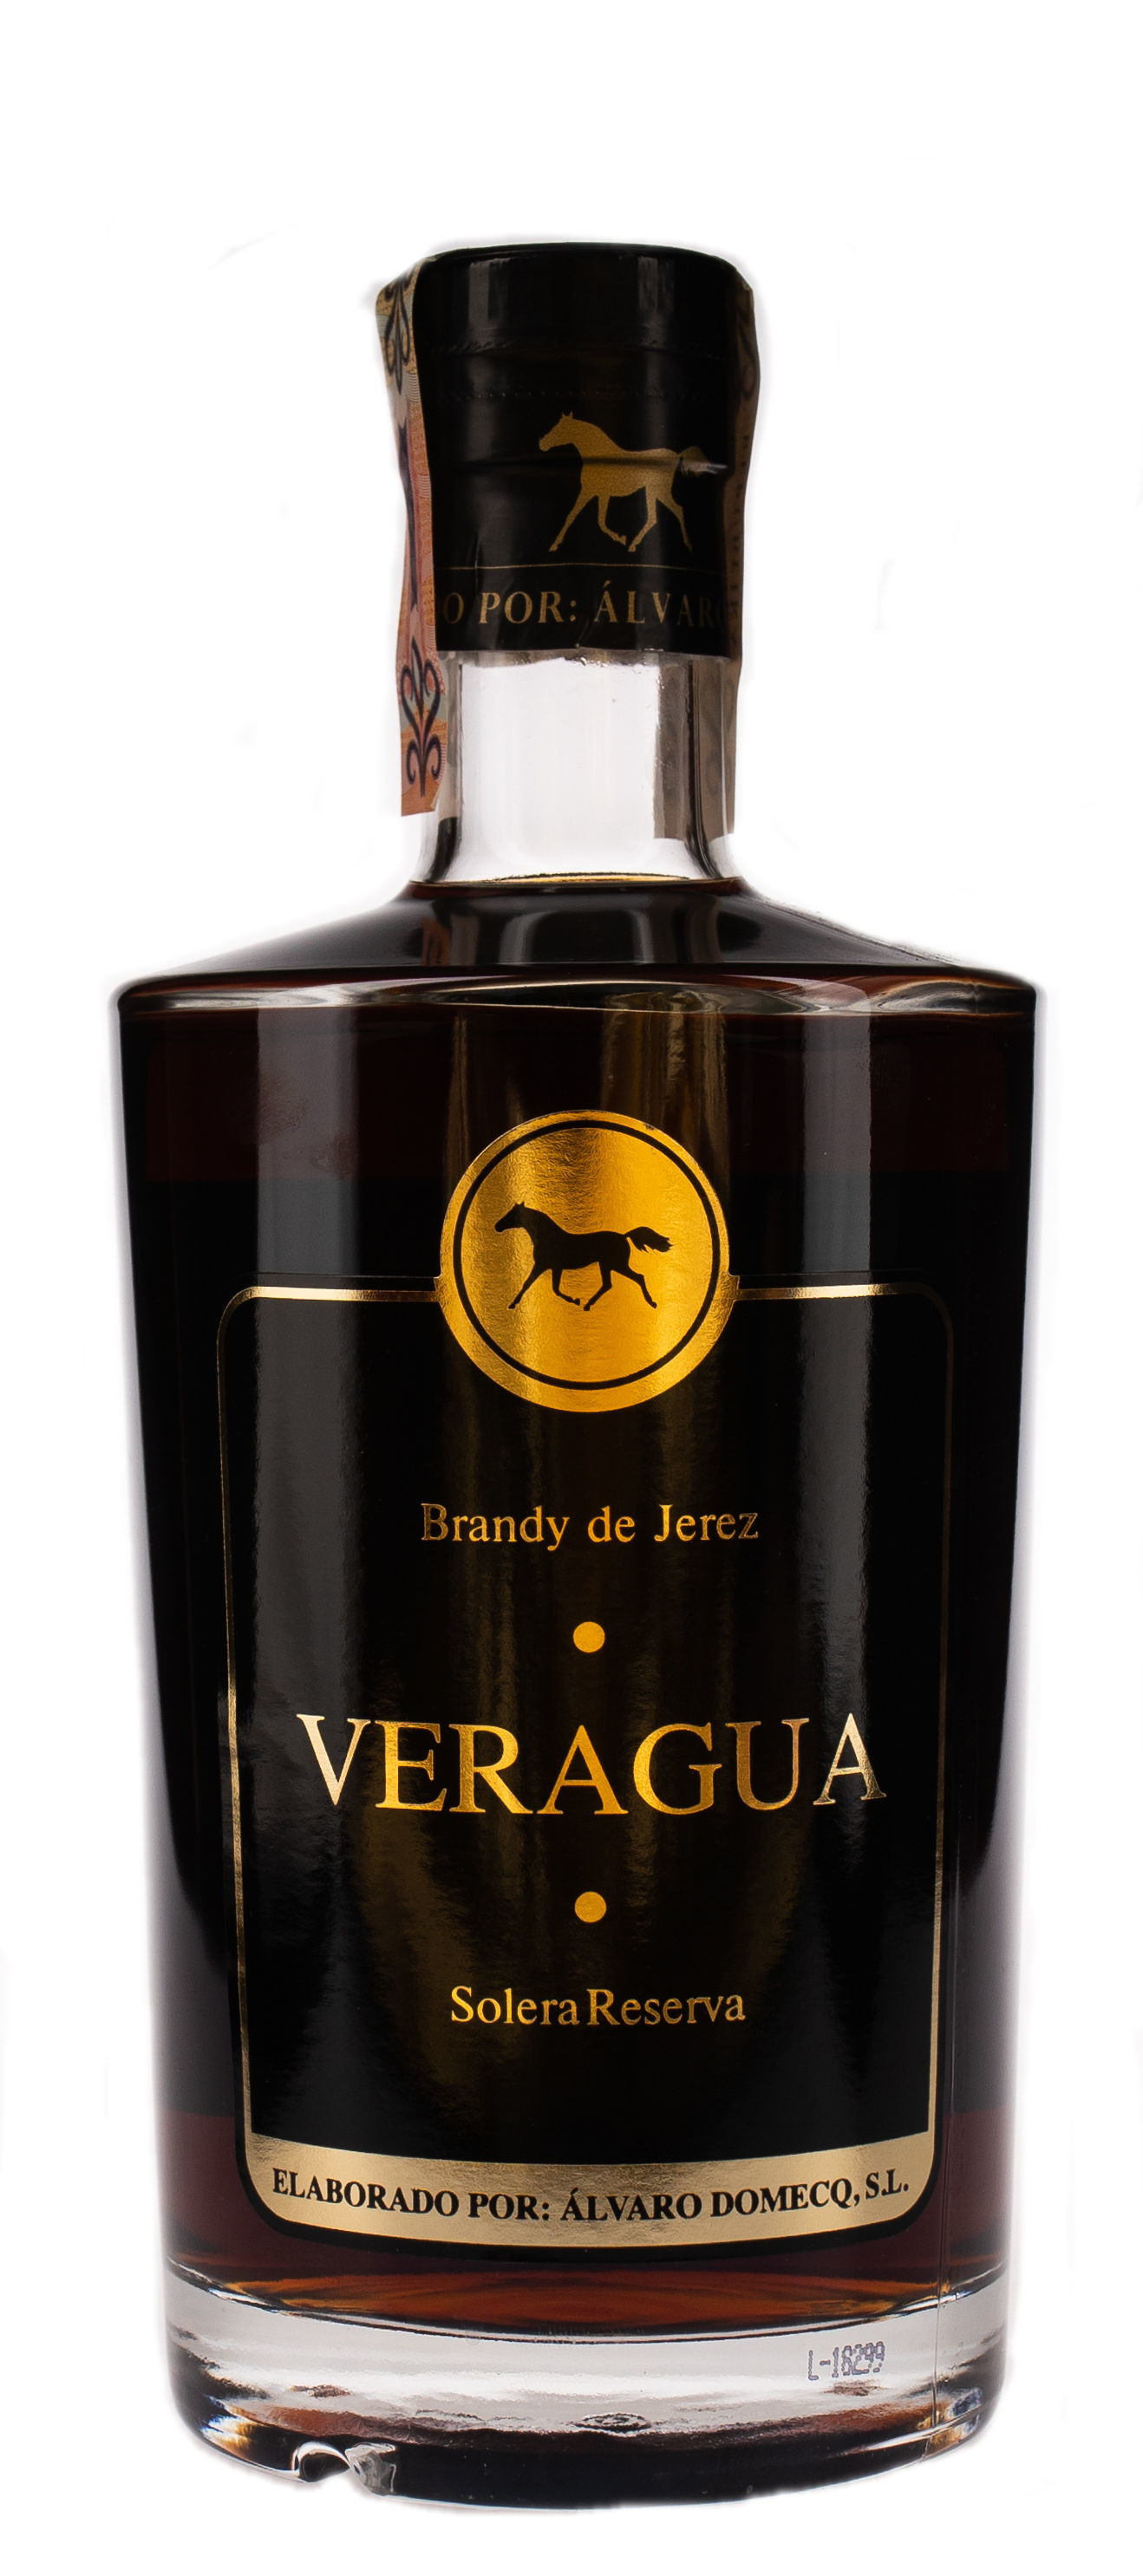 Brandy de Jerez VERAGUA Solera Reserva, Alvaro Domecq